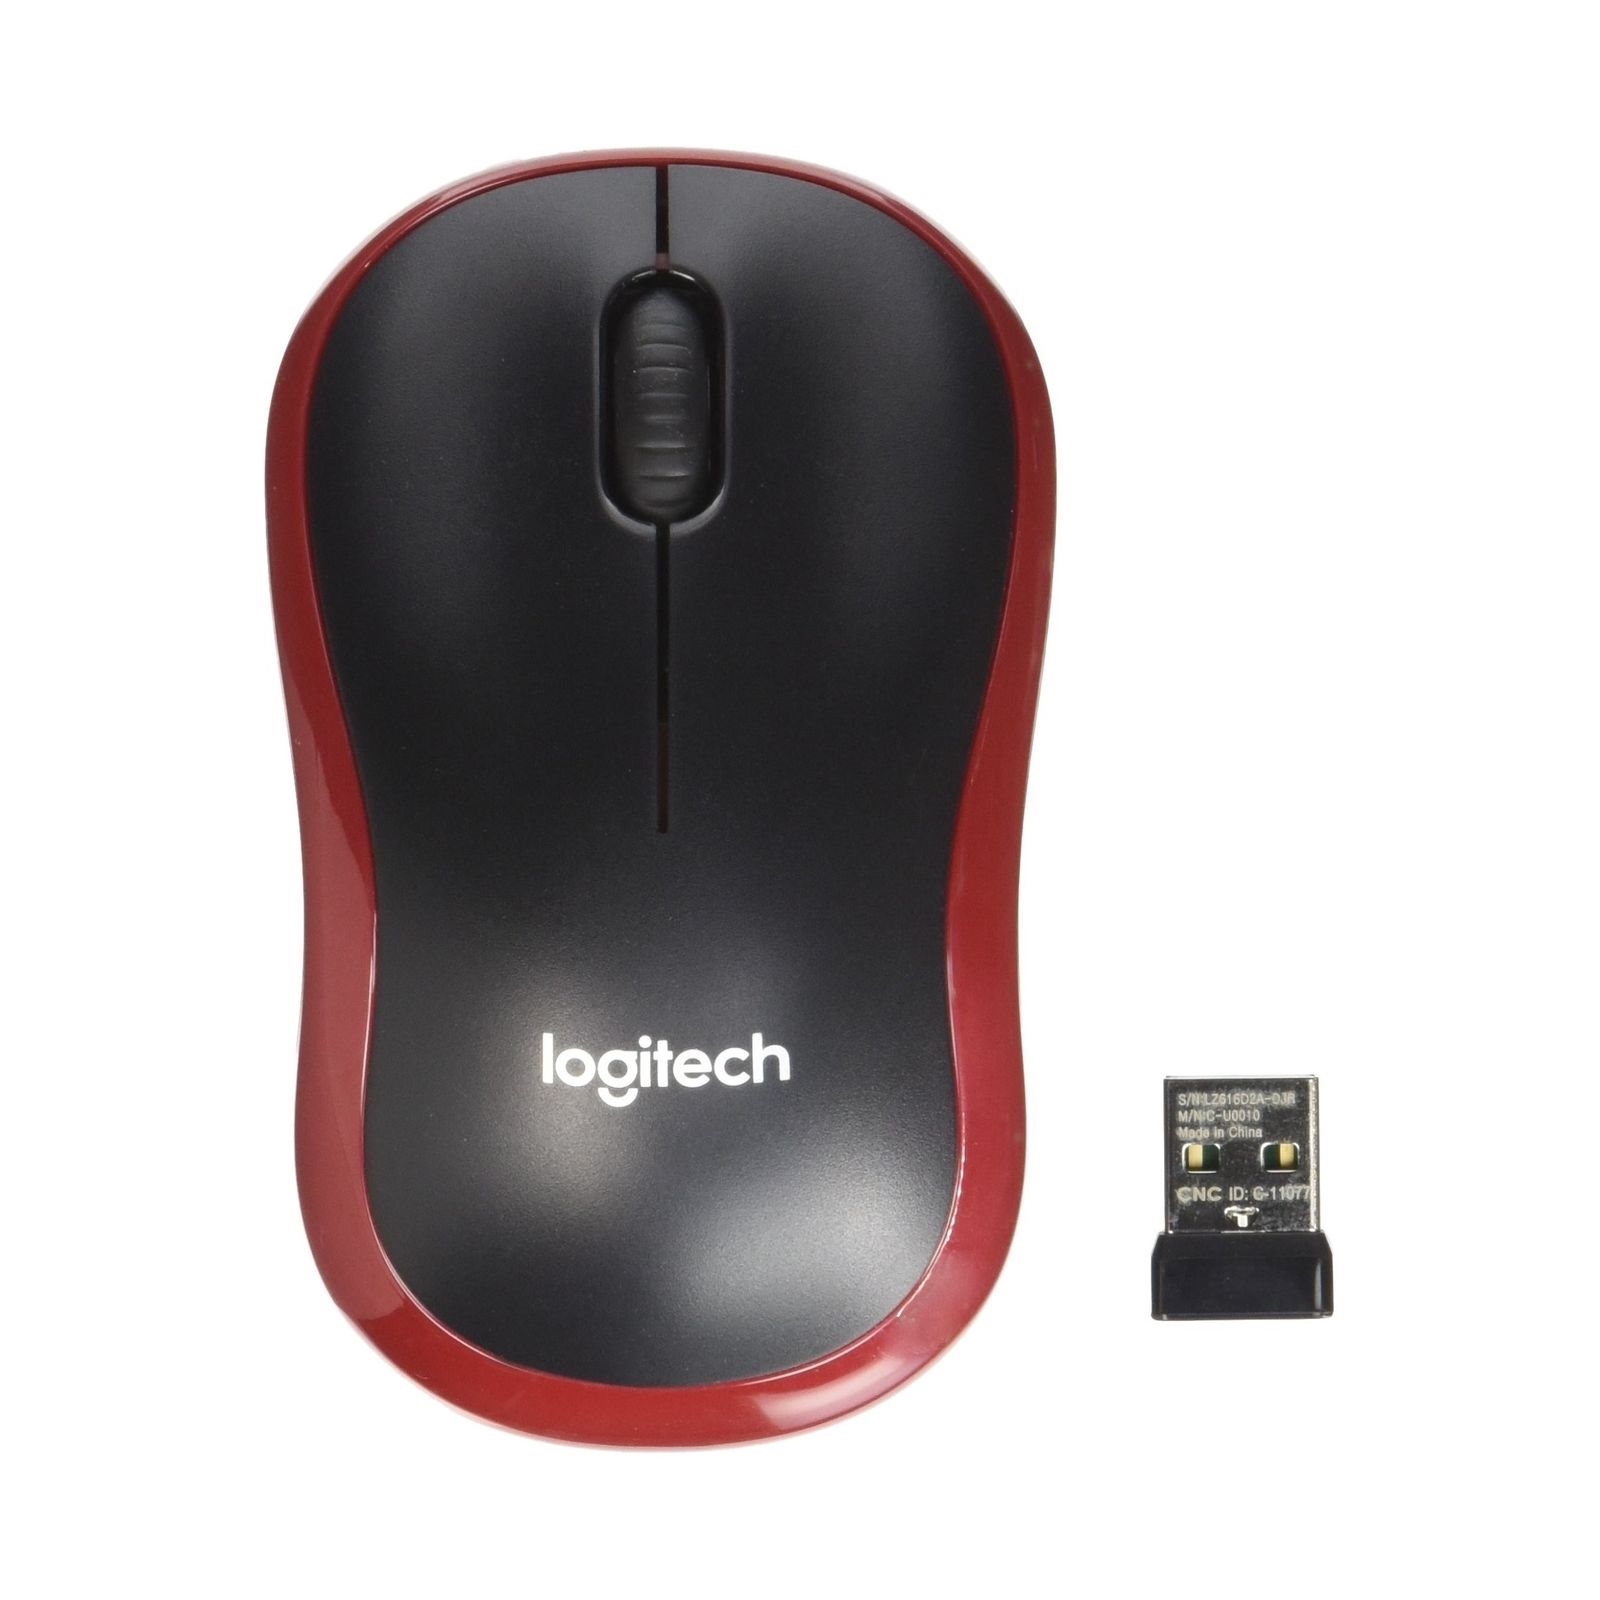 Мышь беспроводная m185. Мышь Logitech m185. Мышь беспроводная Logitech m185. Беспроводная мышь Logitech m185 Wireless. Logitech мышь красная.